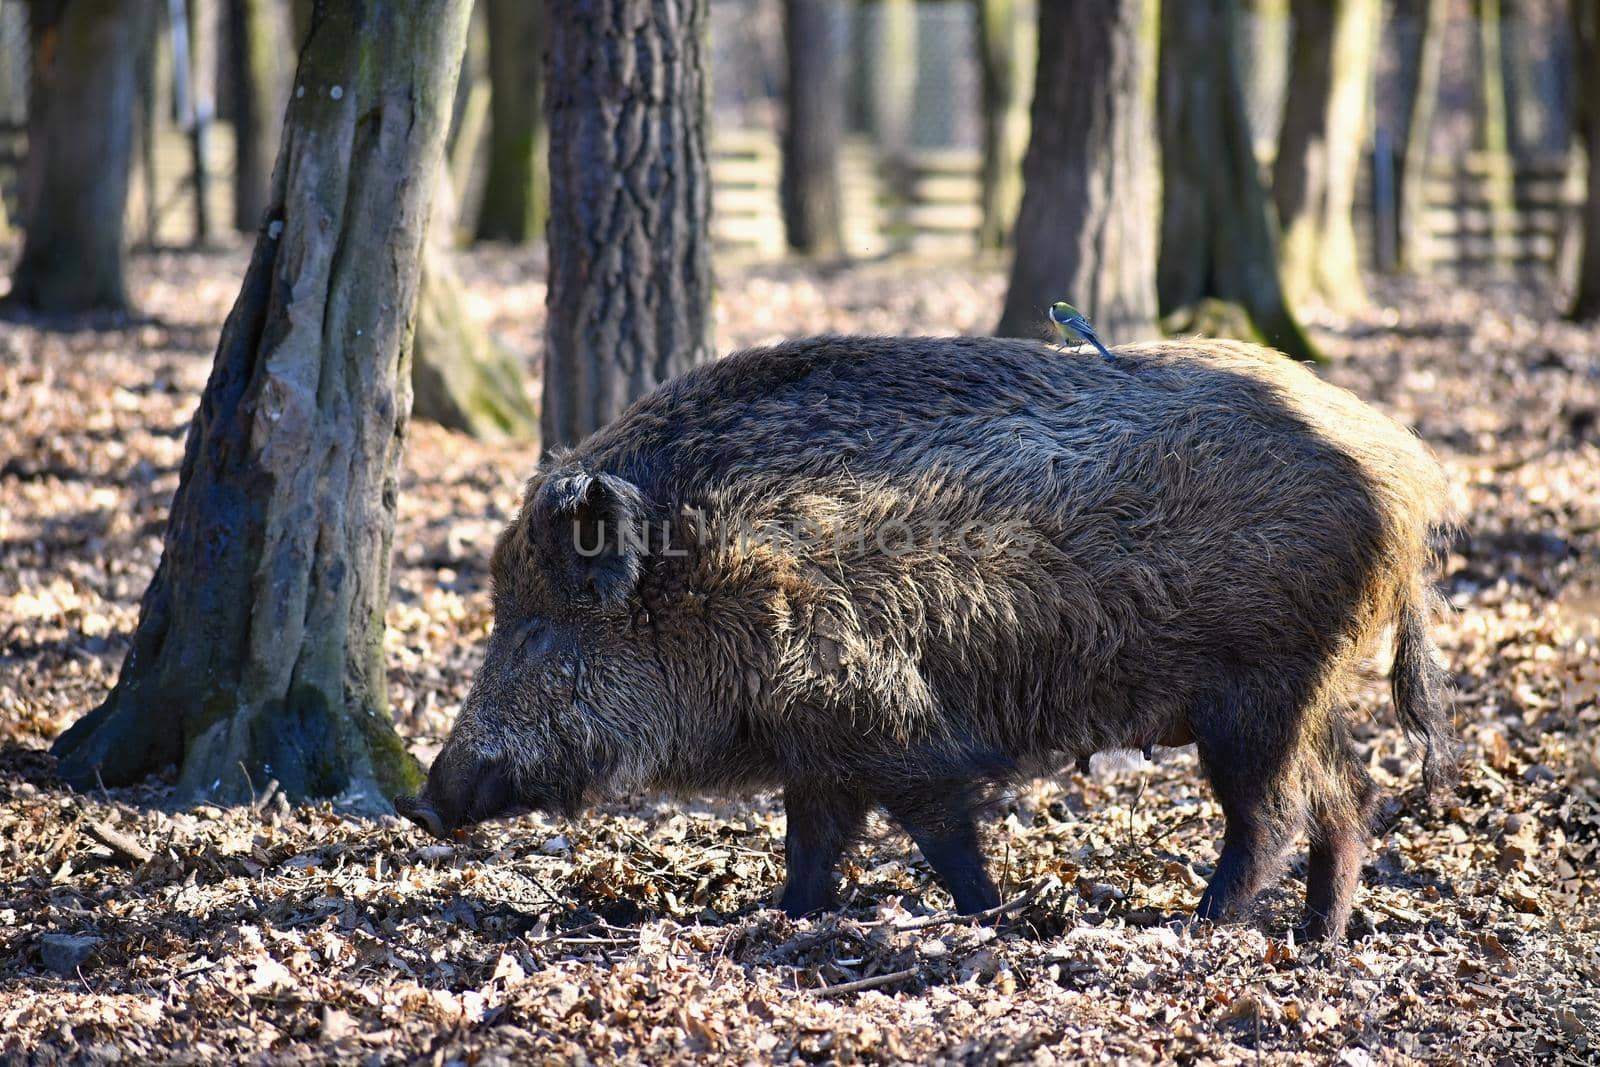 Animal - wild boar in the wild.